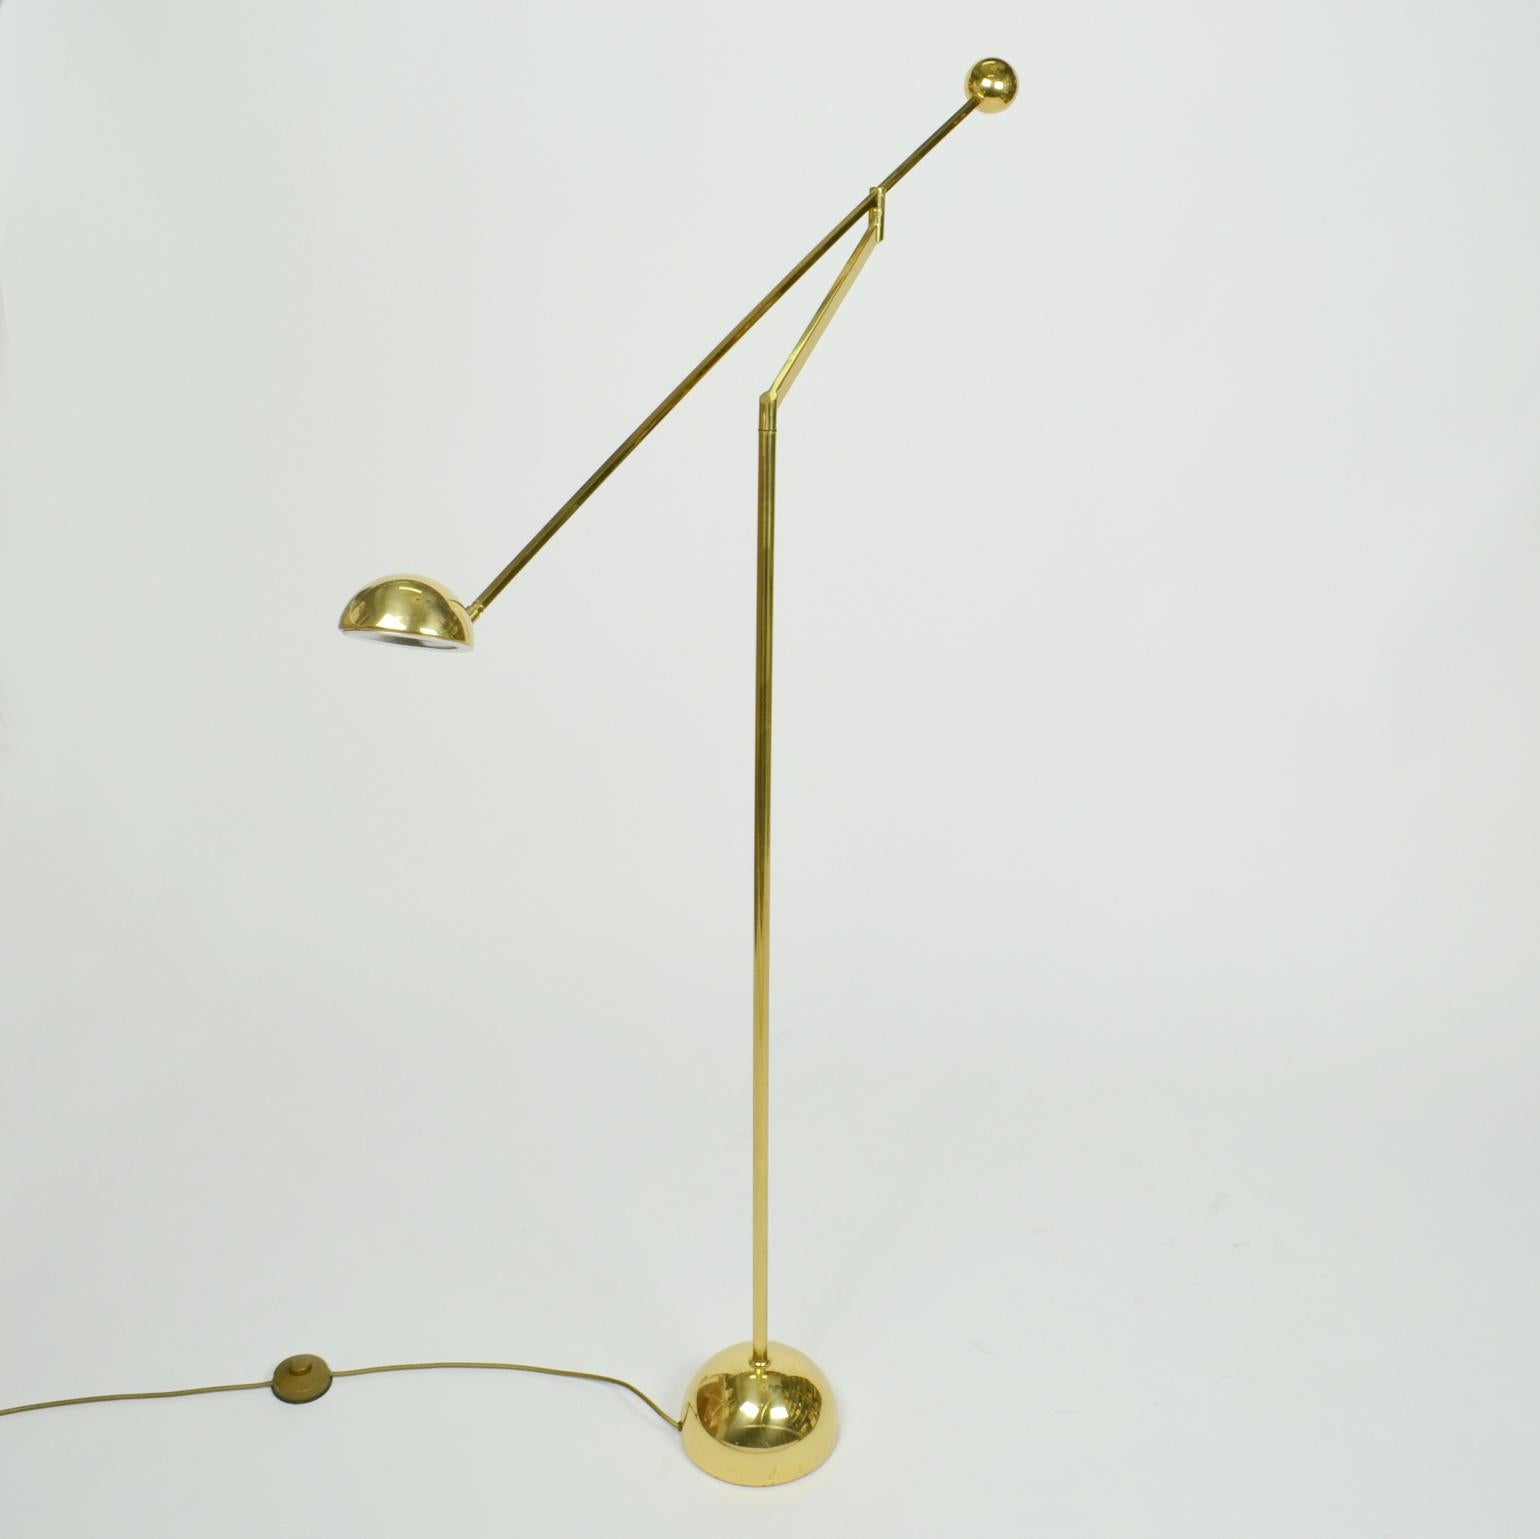 Minimalist Minimal Brass Counter Balance 1970sFloor Lamp For Sale